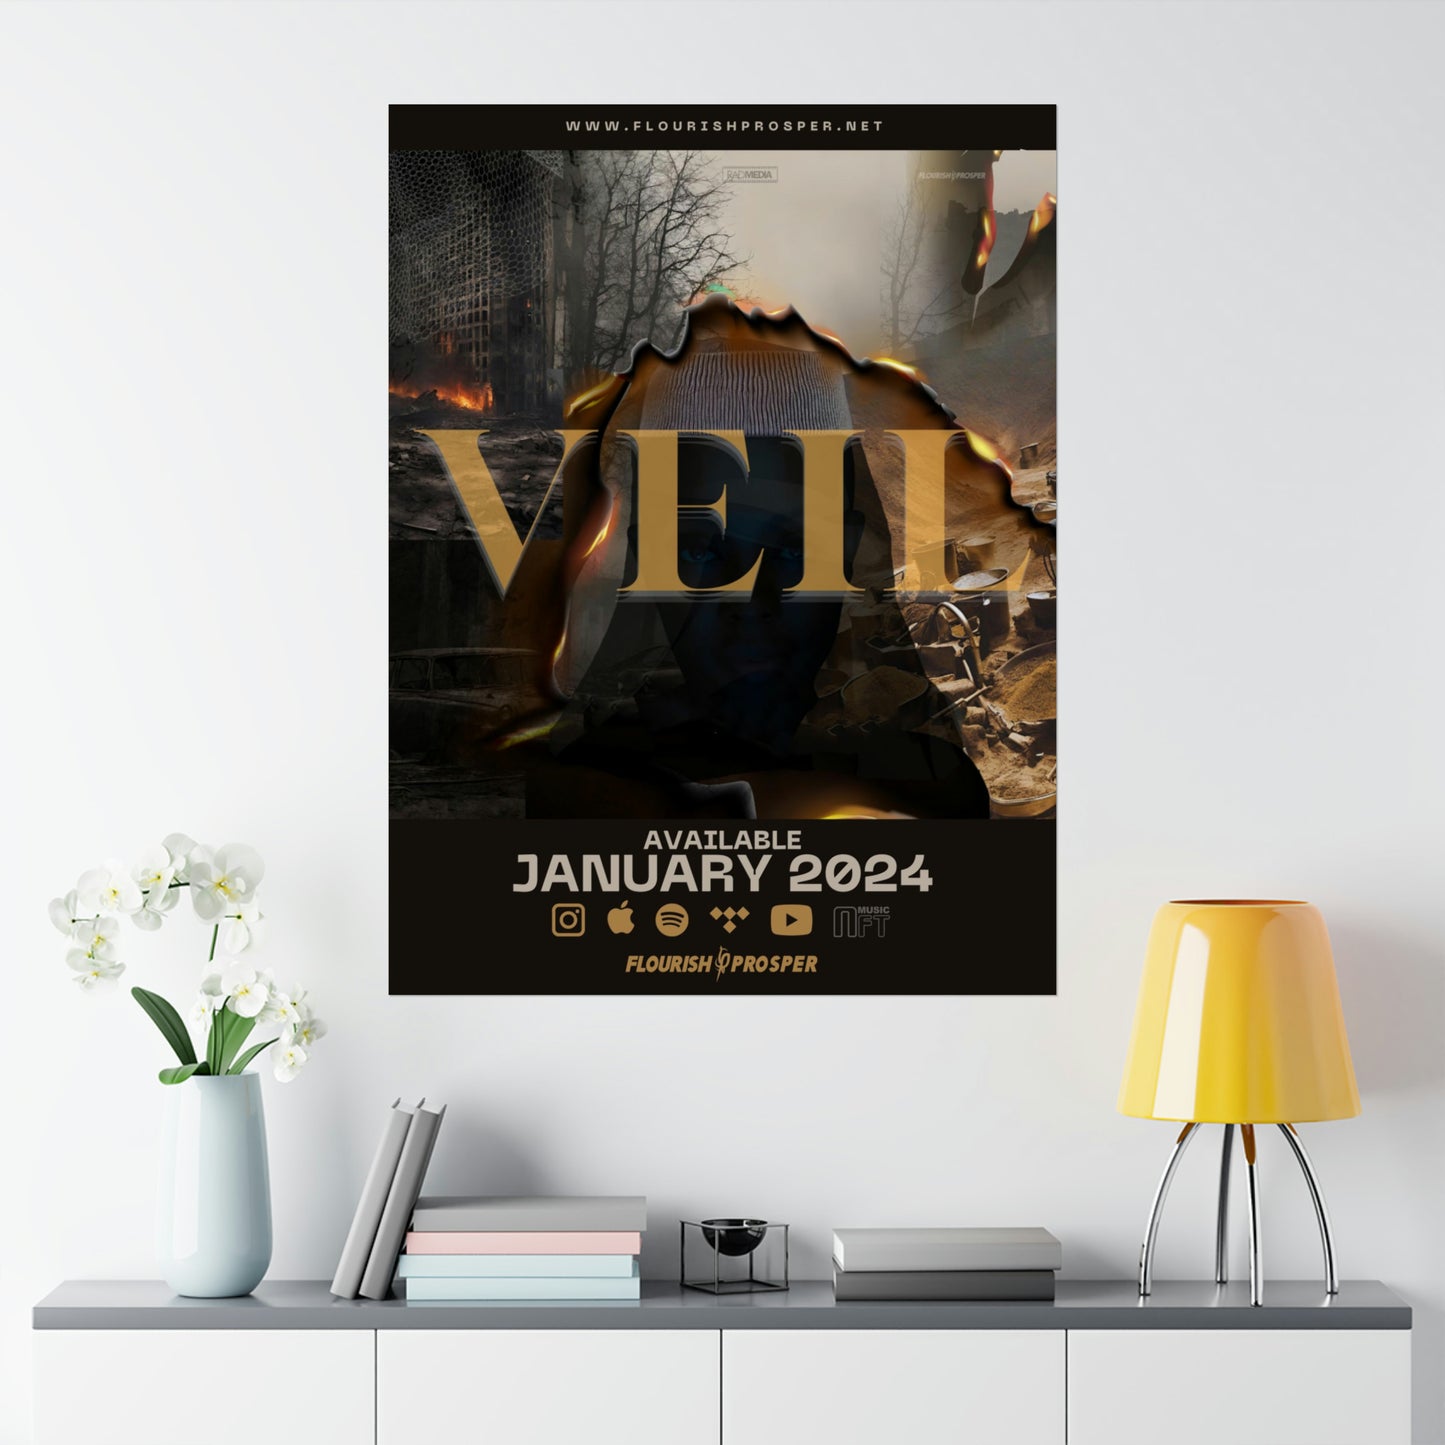 Kat Lincoln and Yone OG "Veil" Matte Vertical Posters